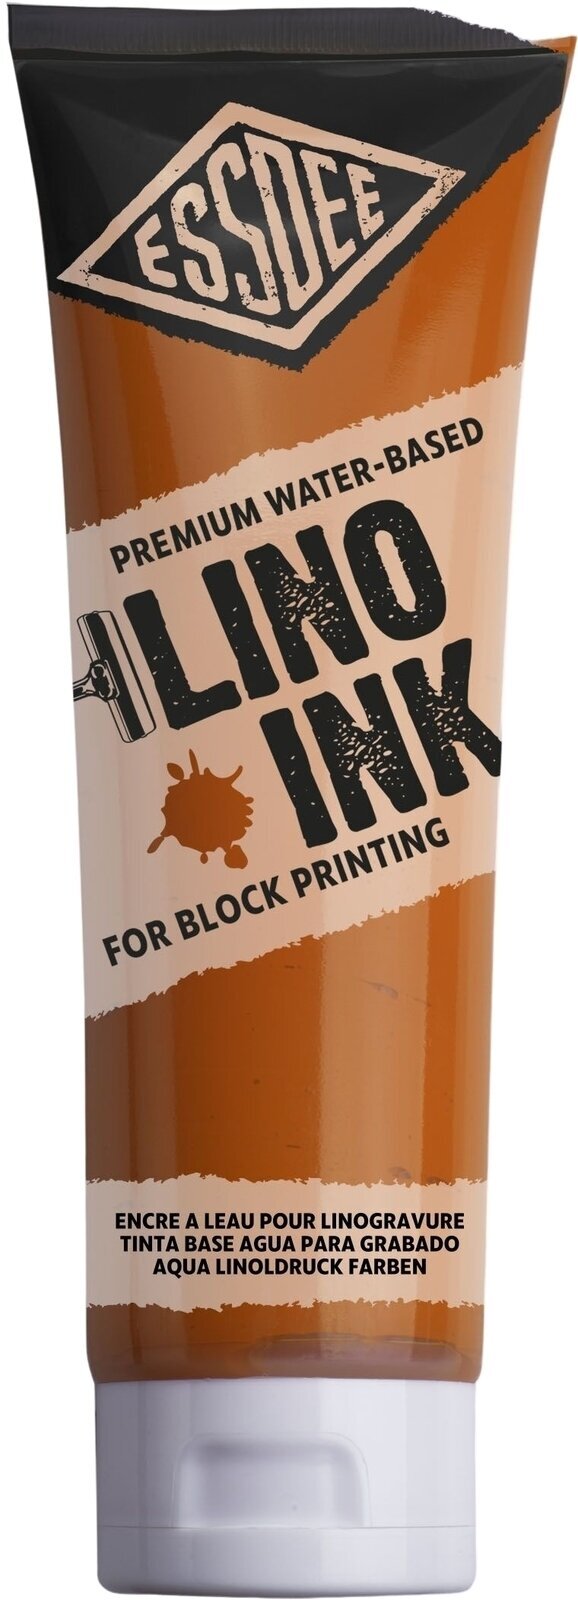 Paint For Linocut Essdee Block Printing Ink Paint For Linocut Orange 300 ml